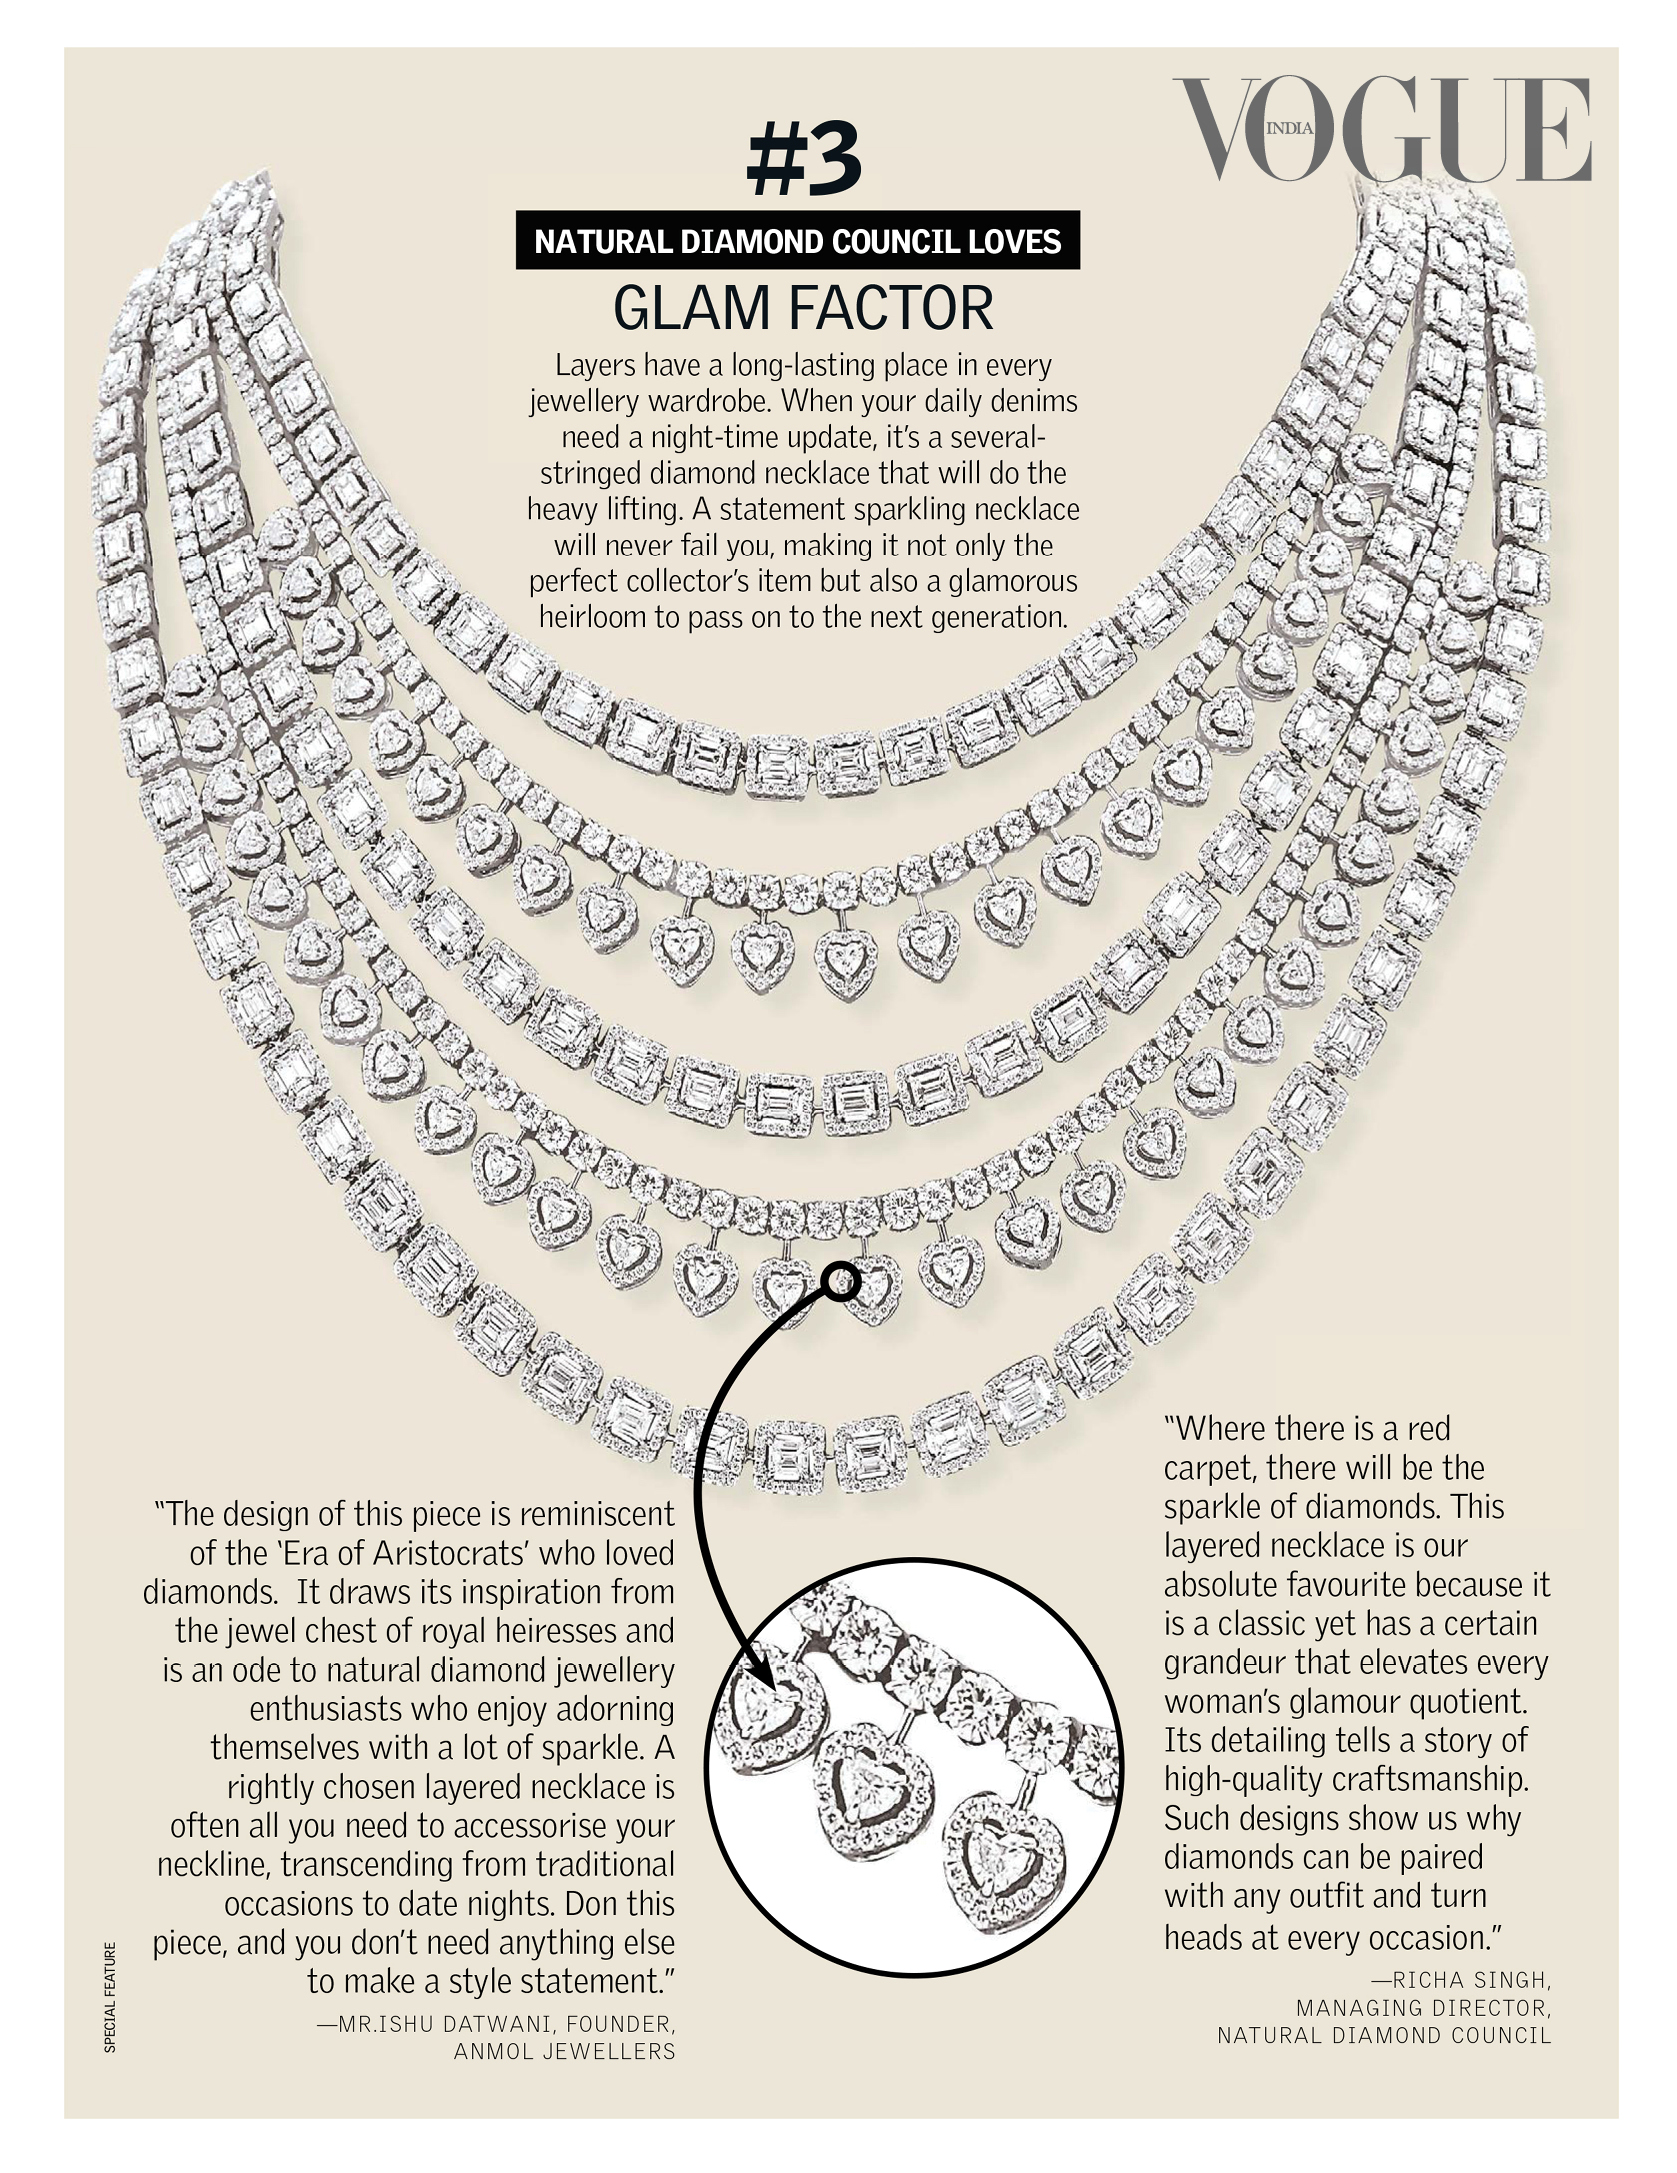 Layered natural diamond necklace
